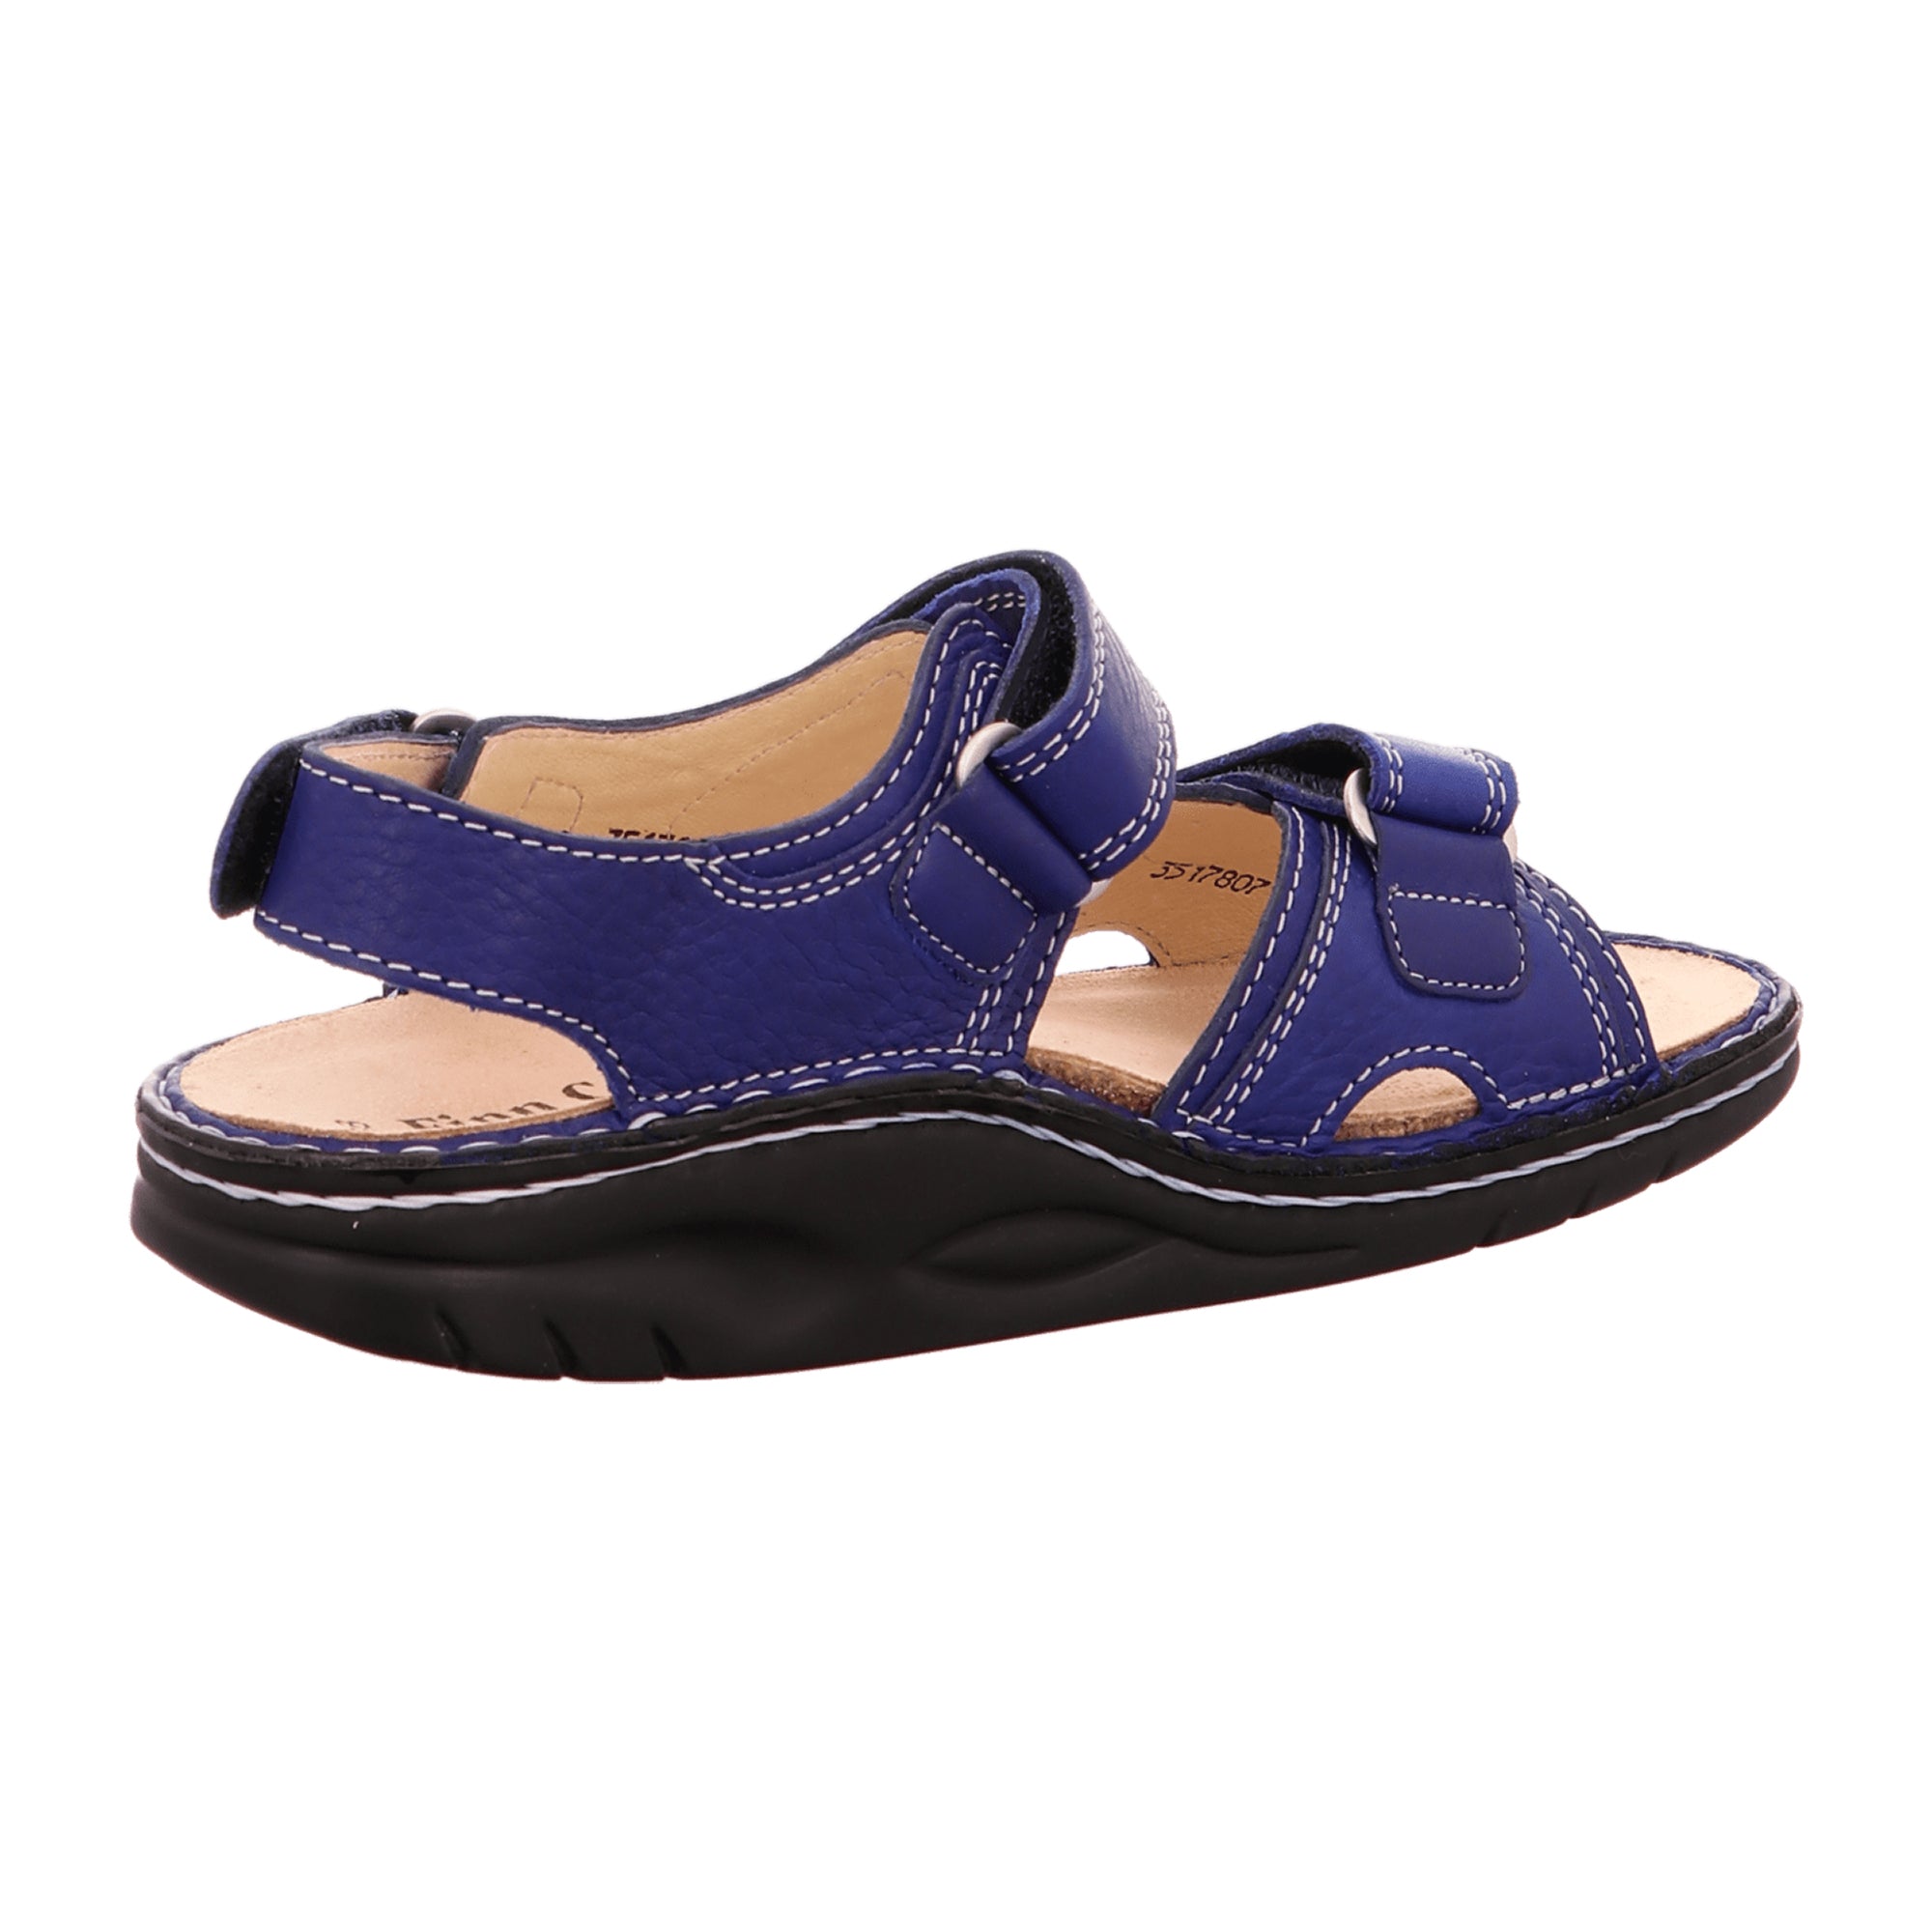 Finn Comfort Yuma Women's Sandals - Adjustable, Comfortable, Removable Insole, Blue Leather (Hillcrest)